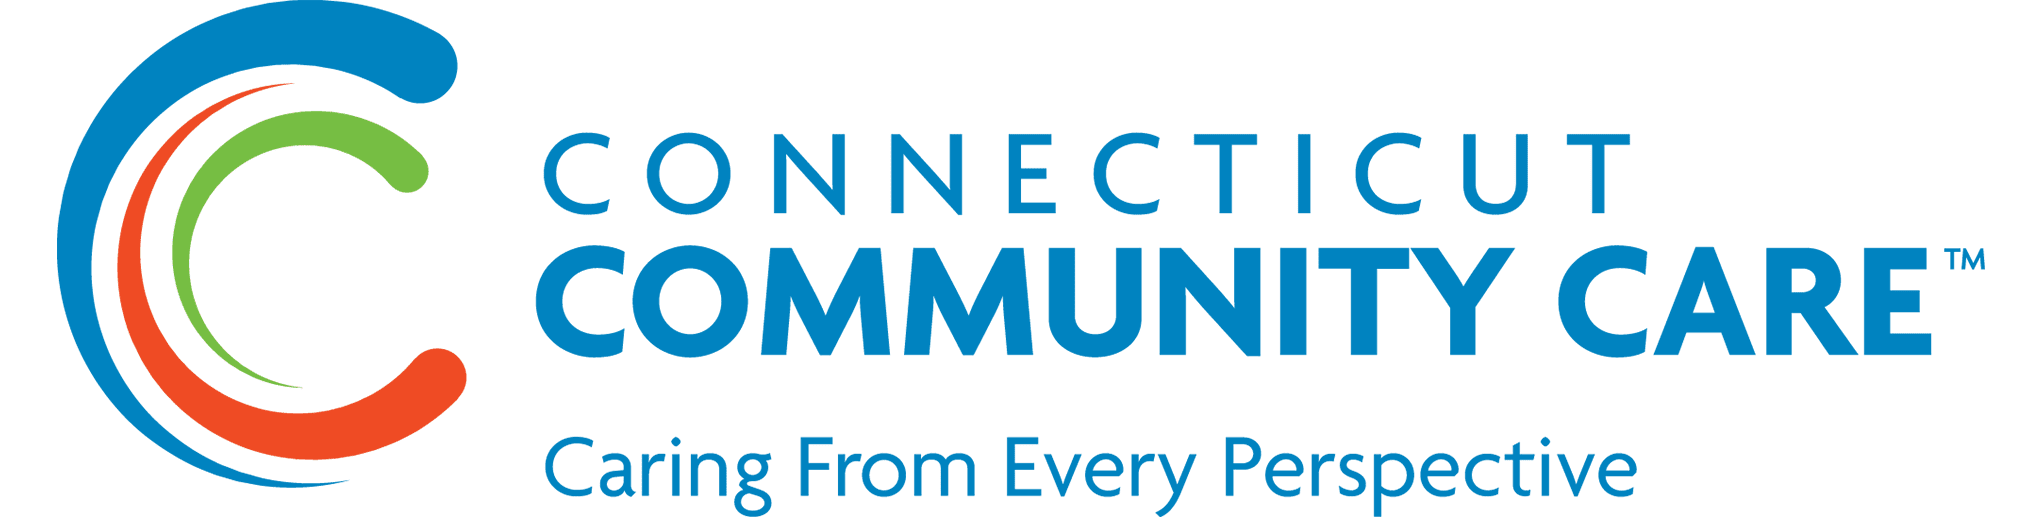 Connecticut Community Care logo